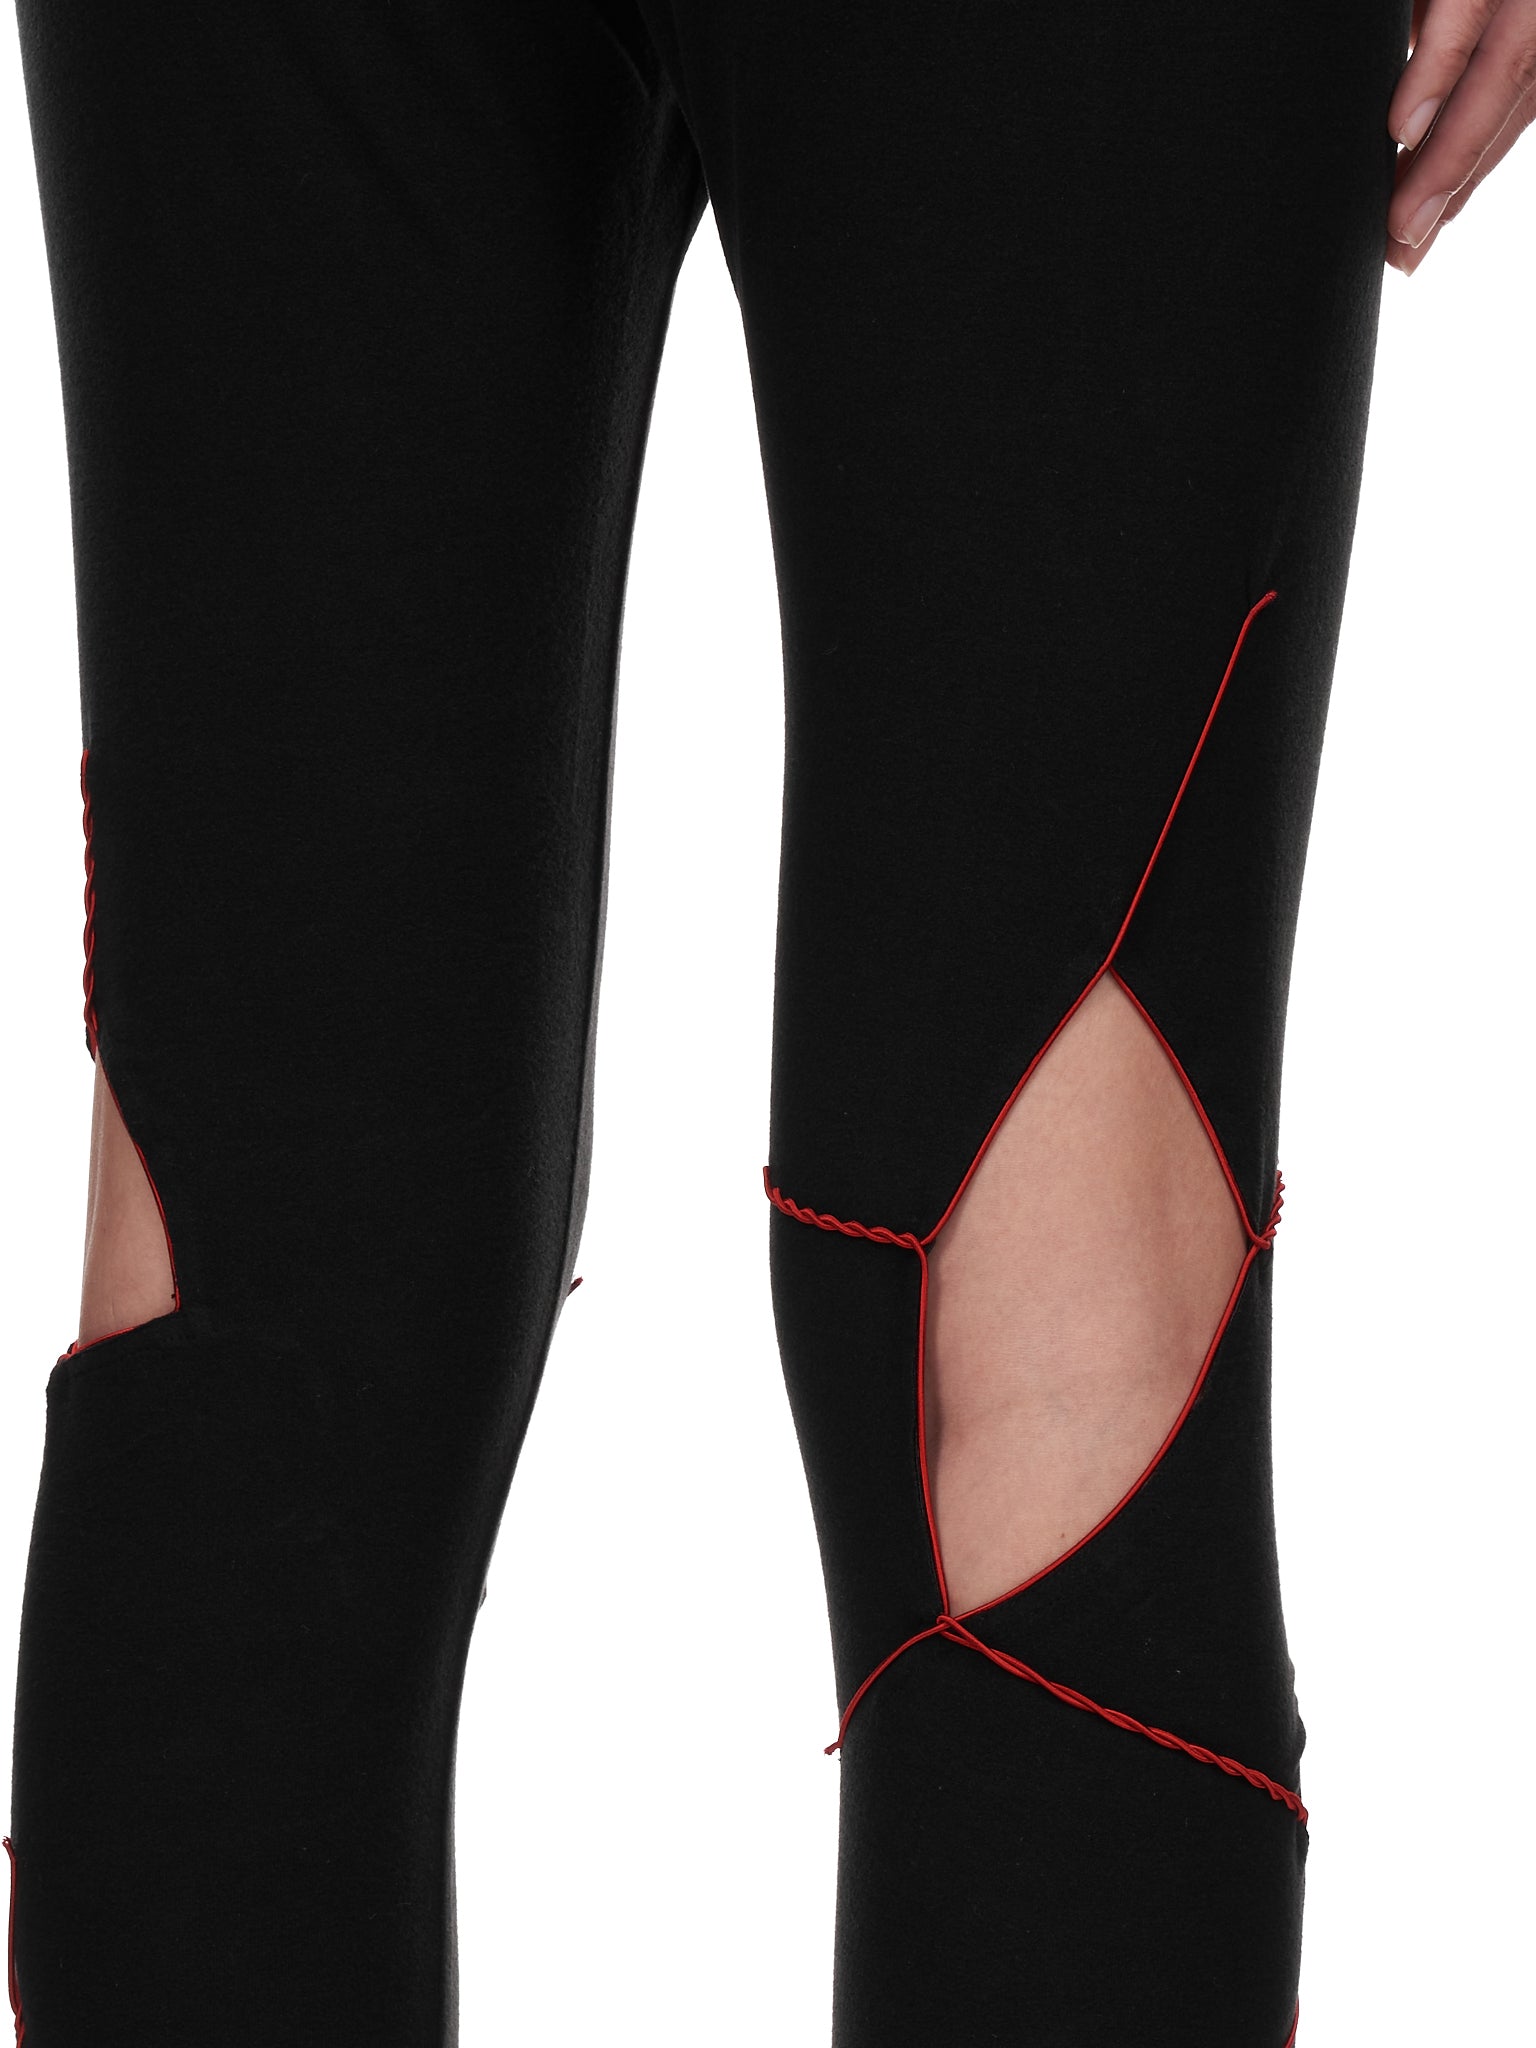 Bombshell Sportswear Dangerous 3 Strap Cutout Leggings Size XS Black